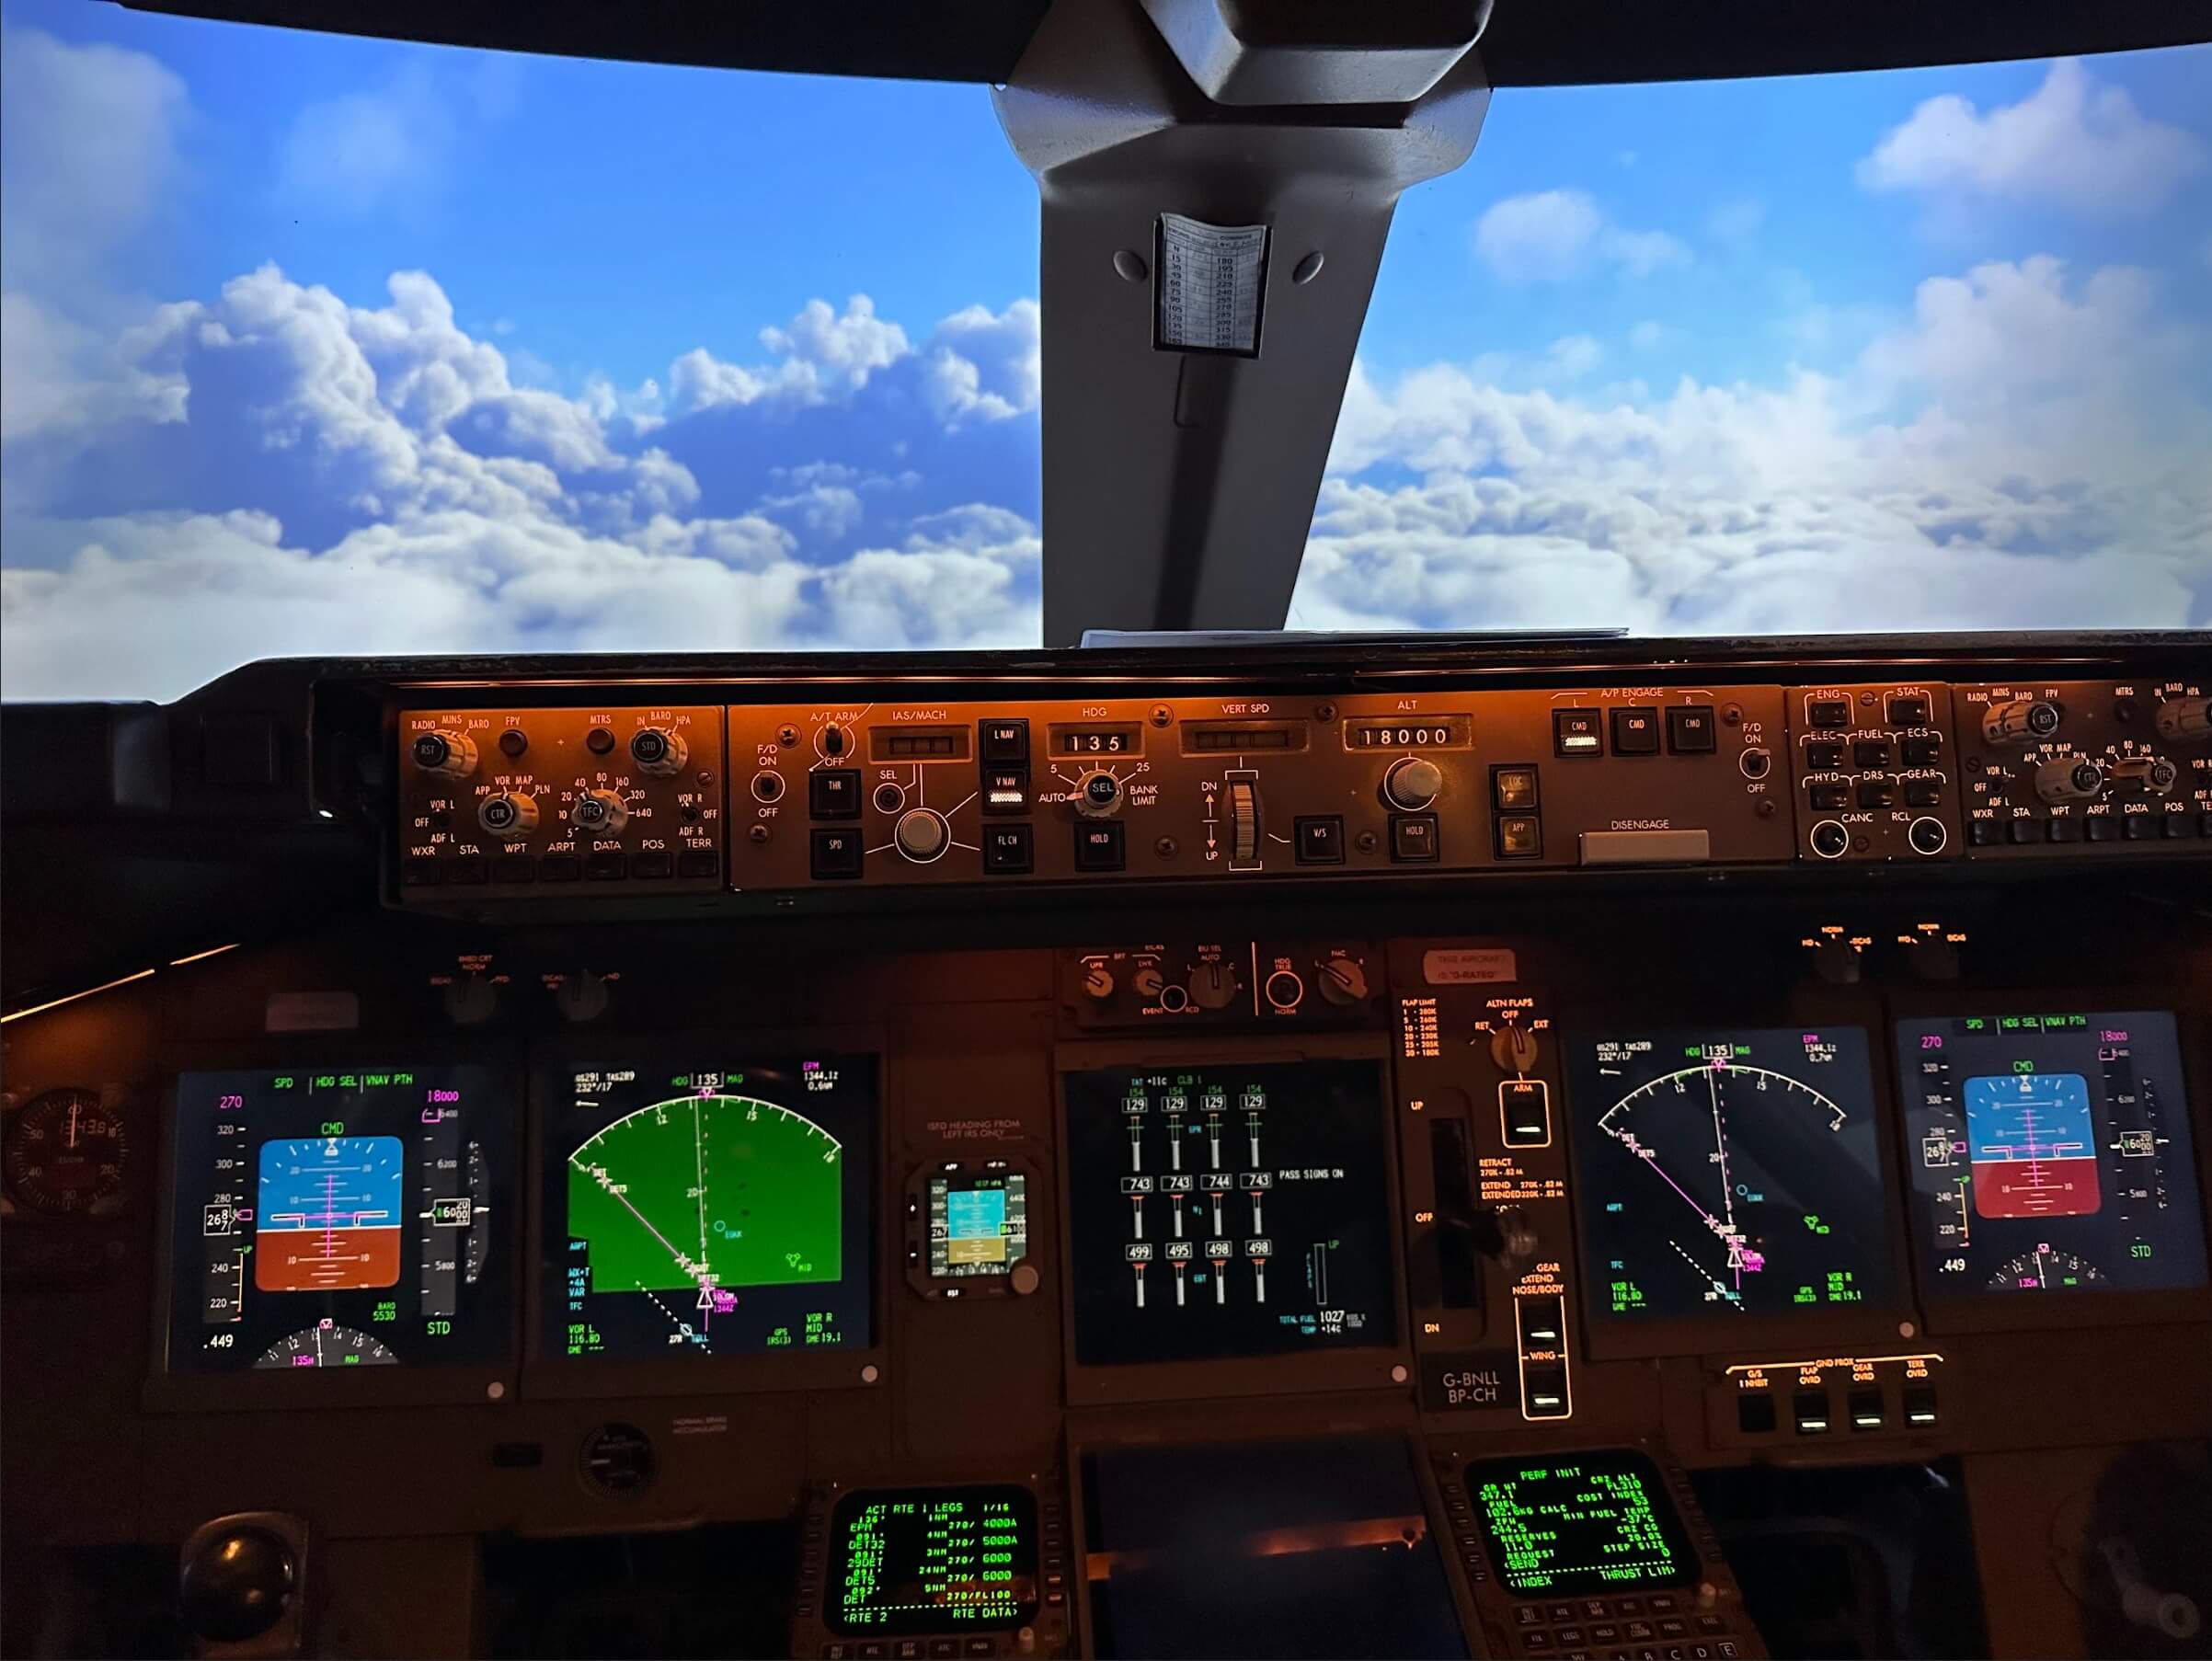 The SimfestUK Boeing 747-400 Simulator